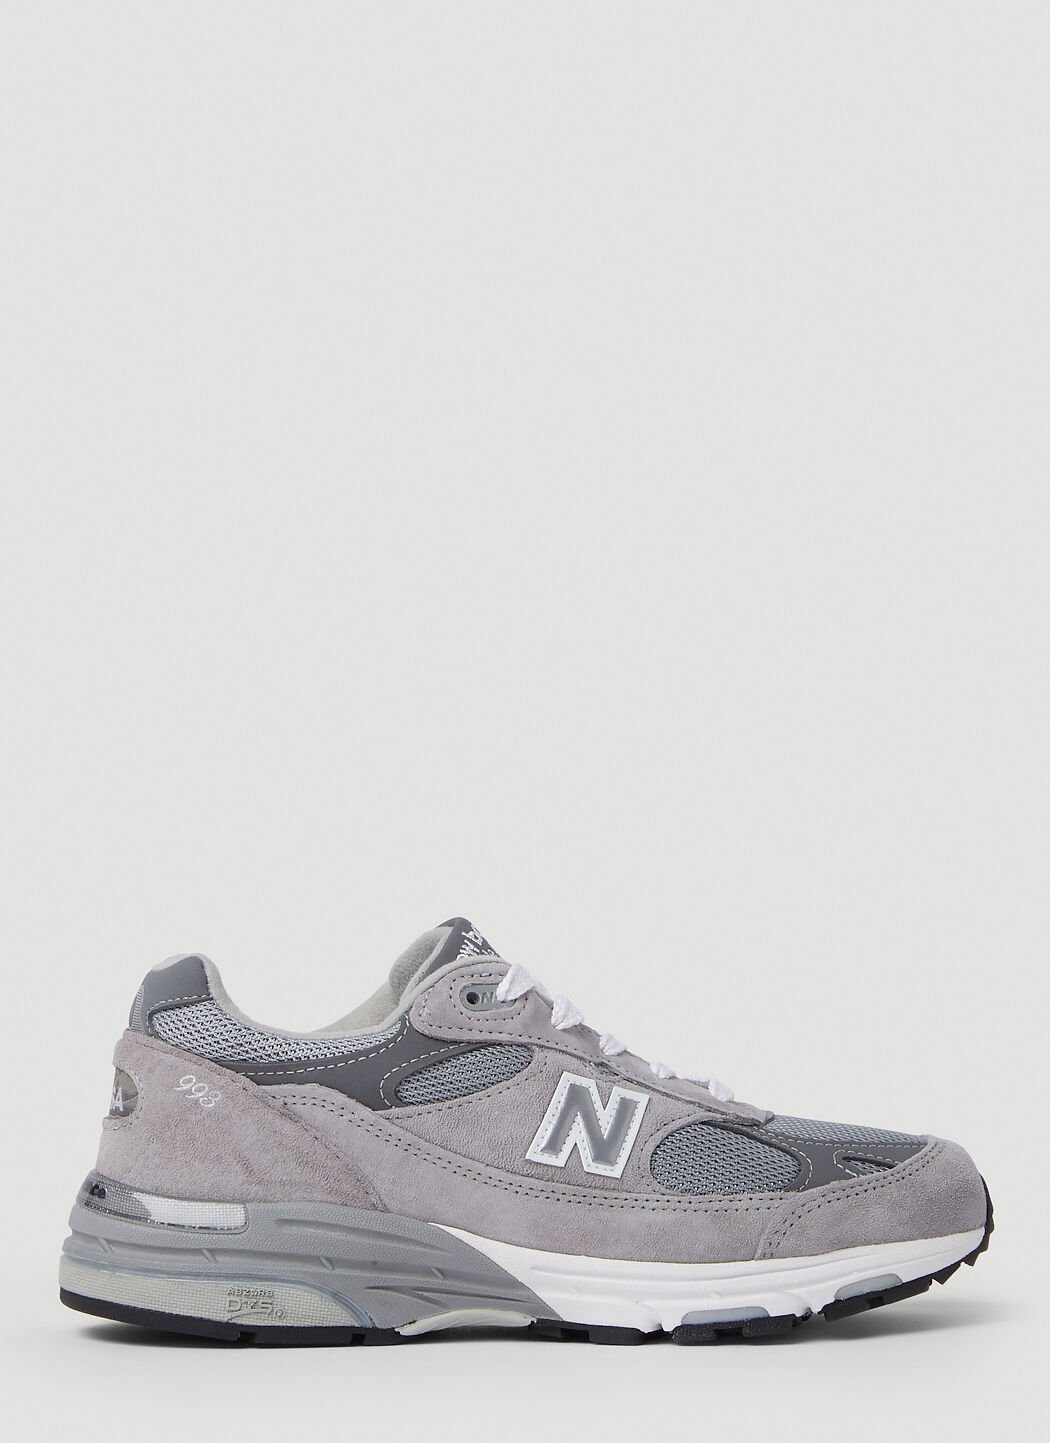 New Balance 993 Sneakers グレー new0254004